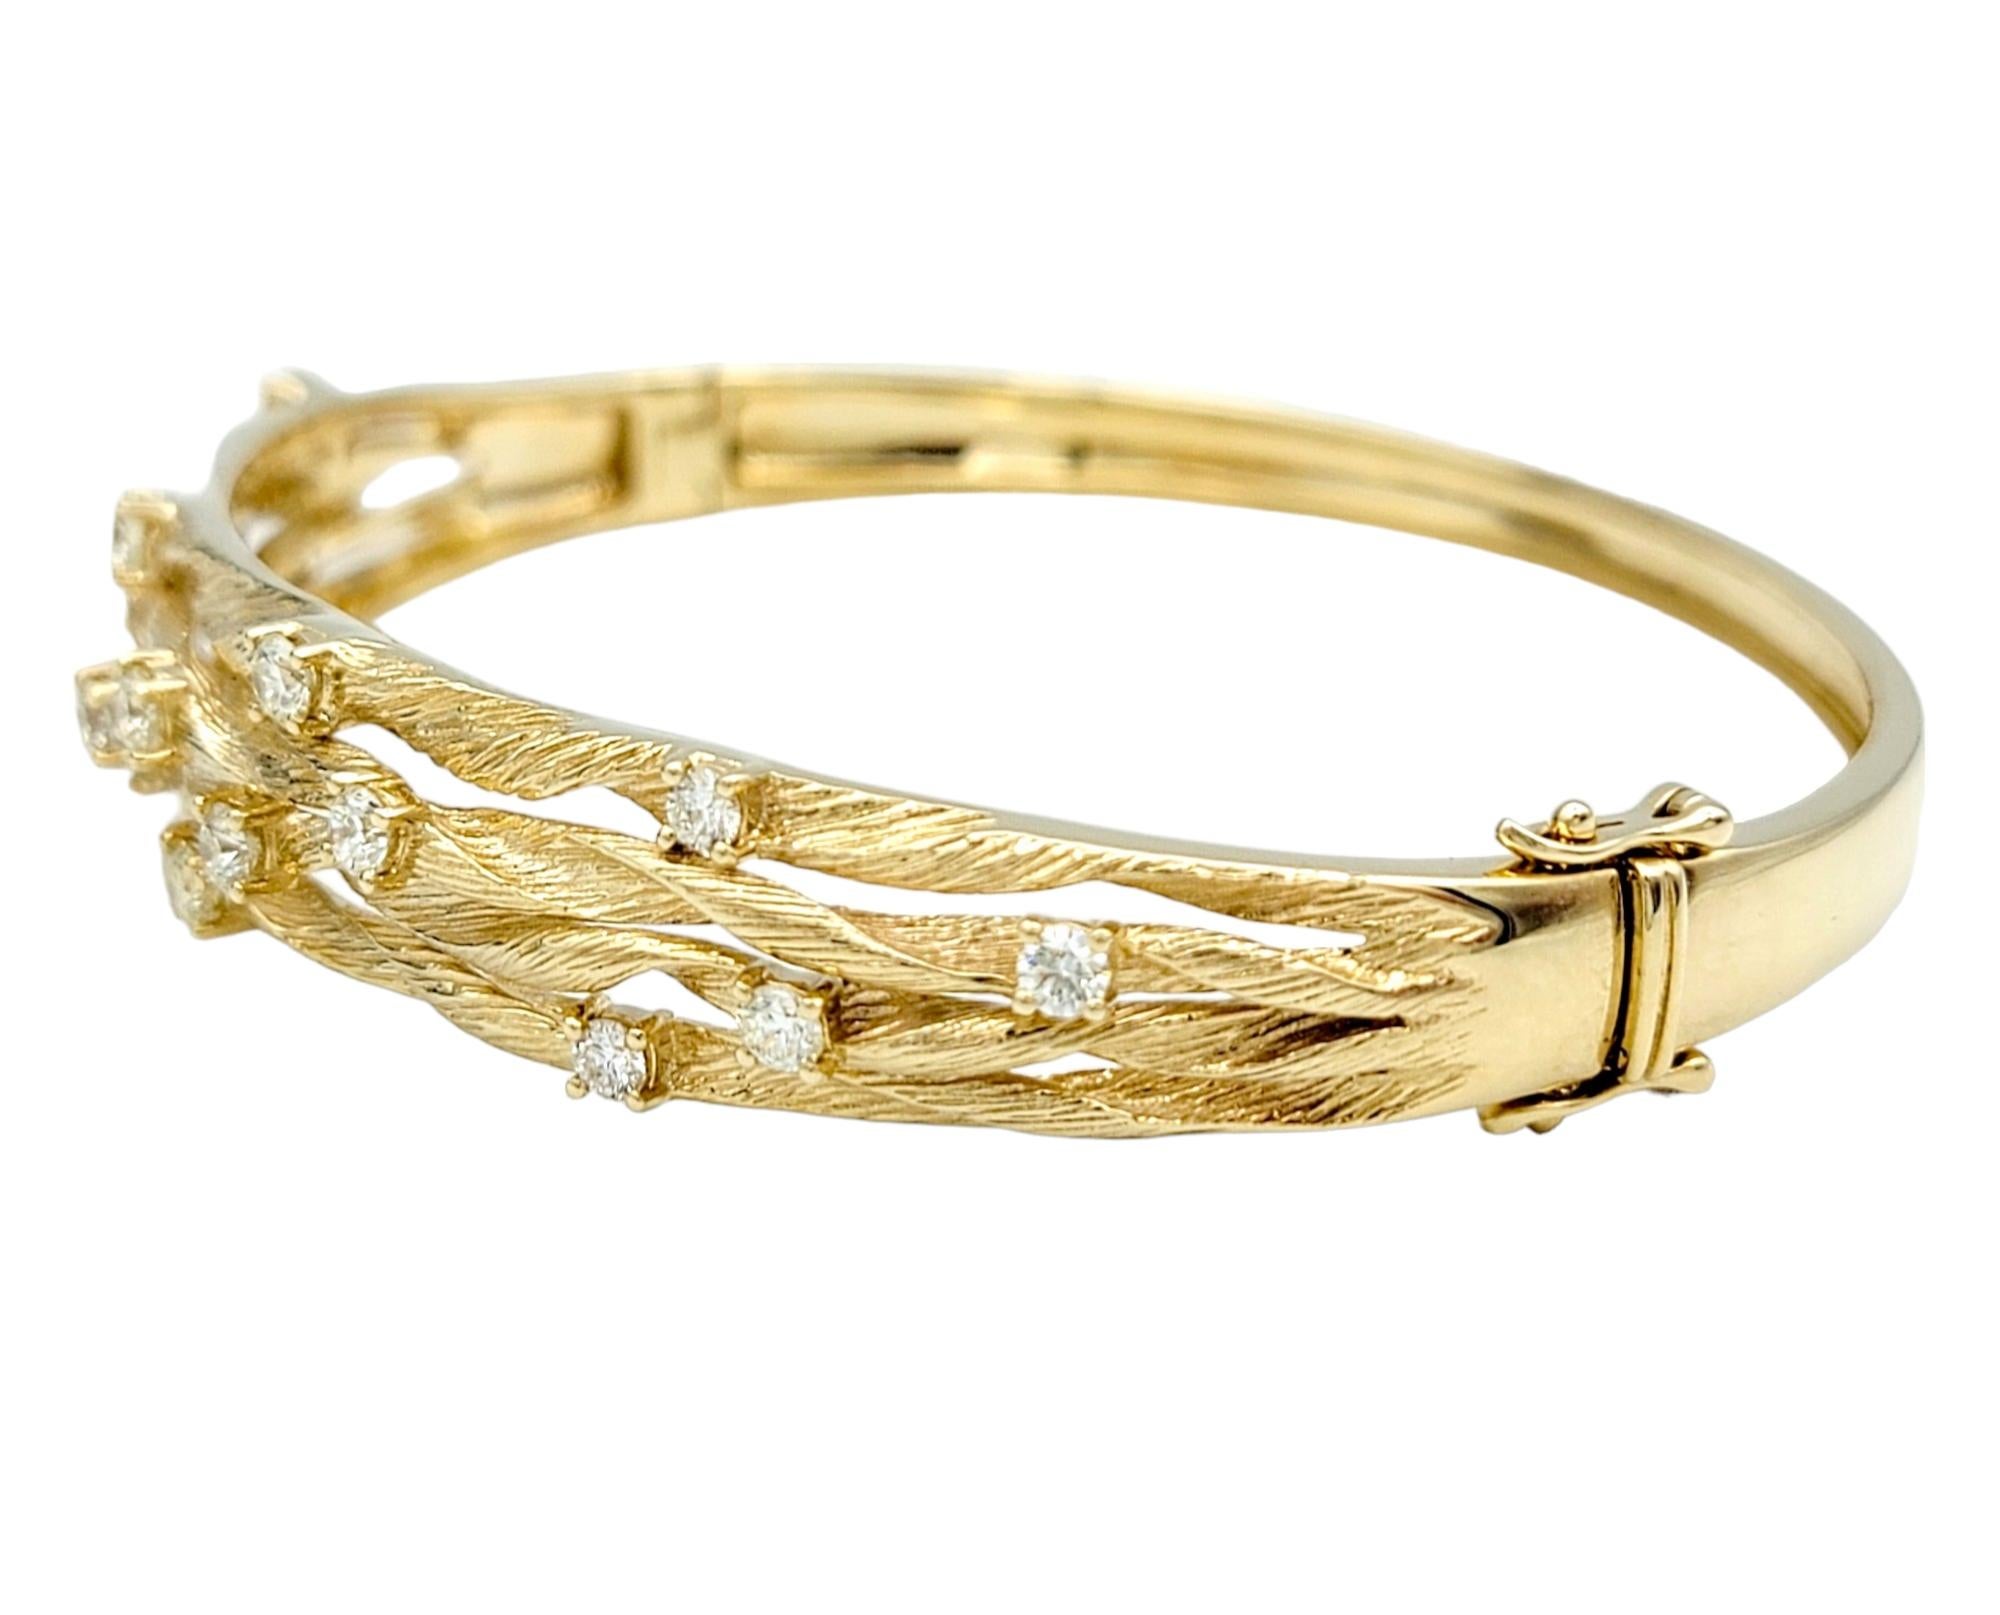 Contemporary Effy D'oro Diamond Twisted Rope Design Bangle Bracelet in 14 Karat Yellow Gold